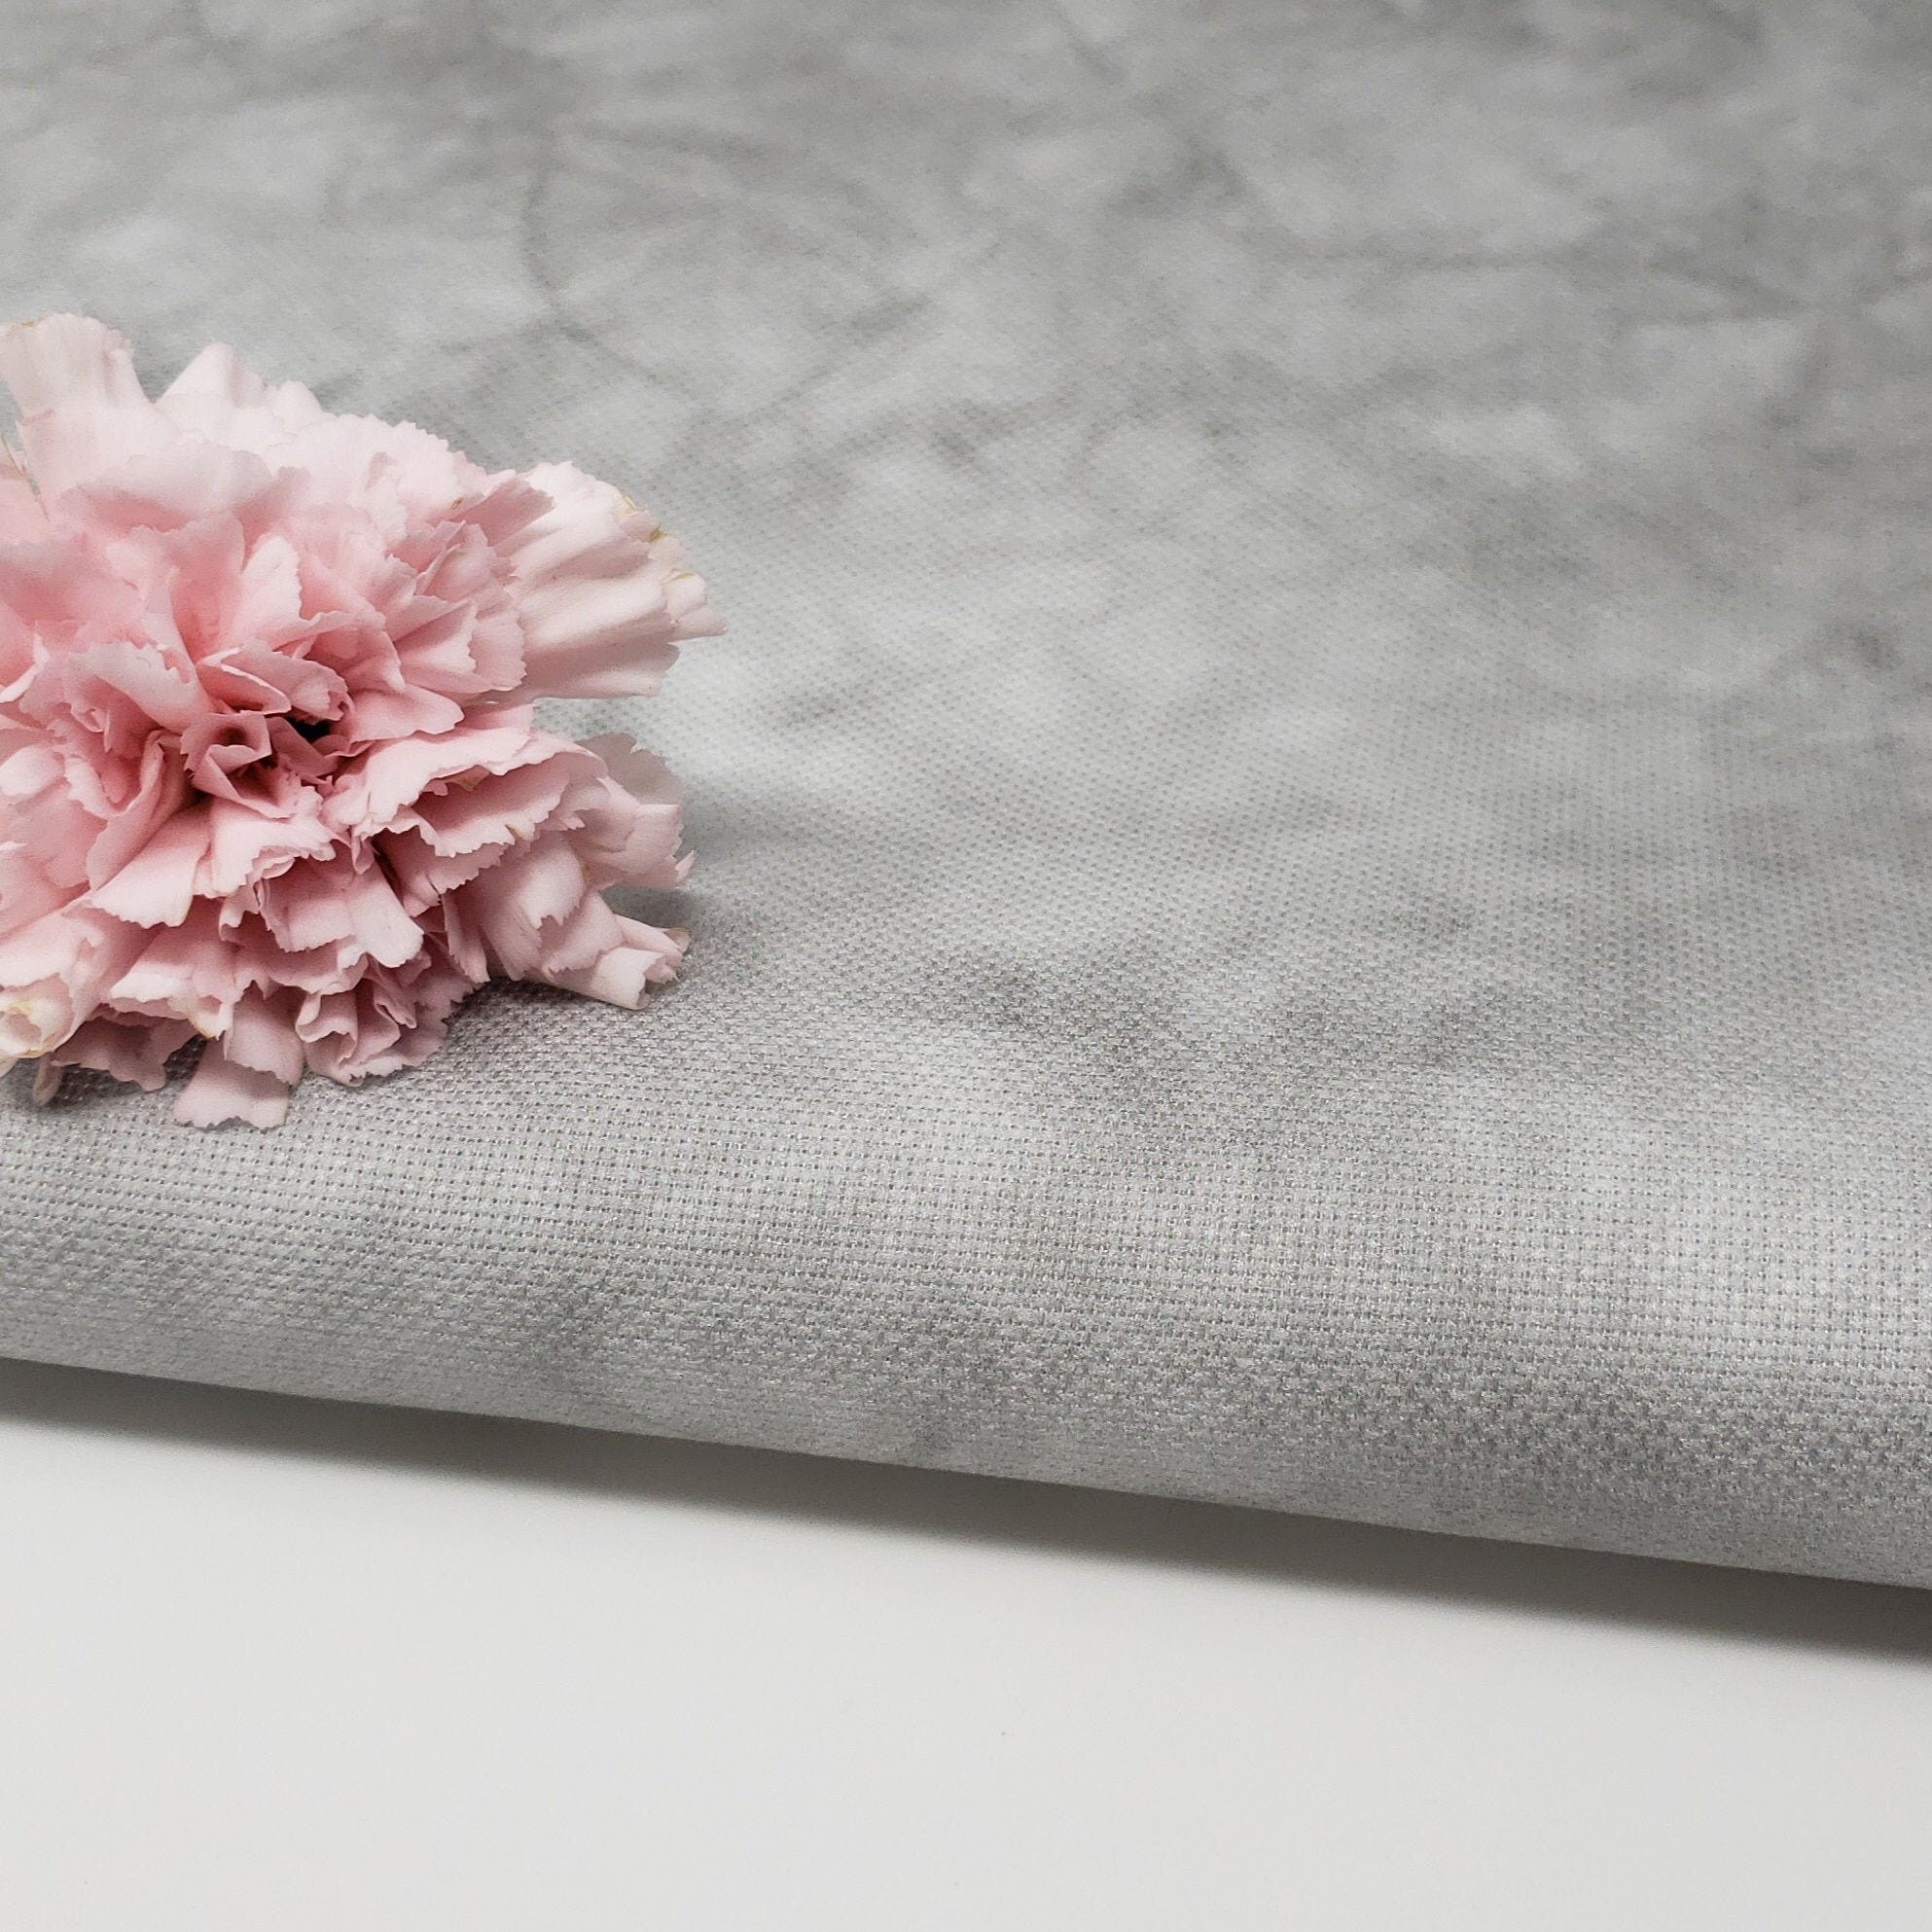 Cross Stitch Cloth - Fabric Flair 16 Count Aida - Hazy Gray 18 x